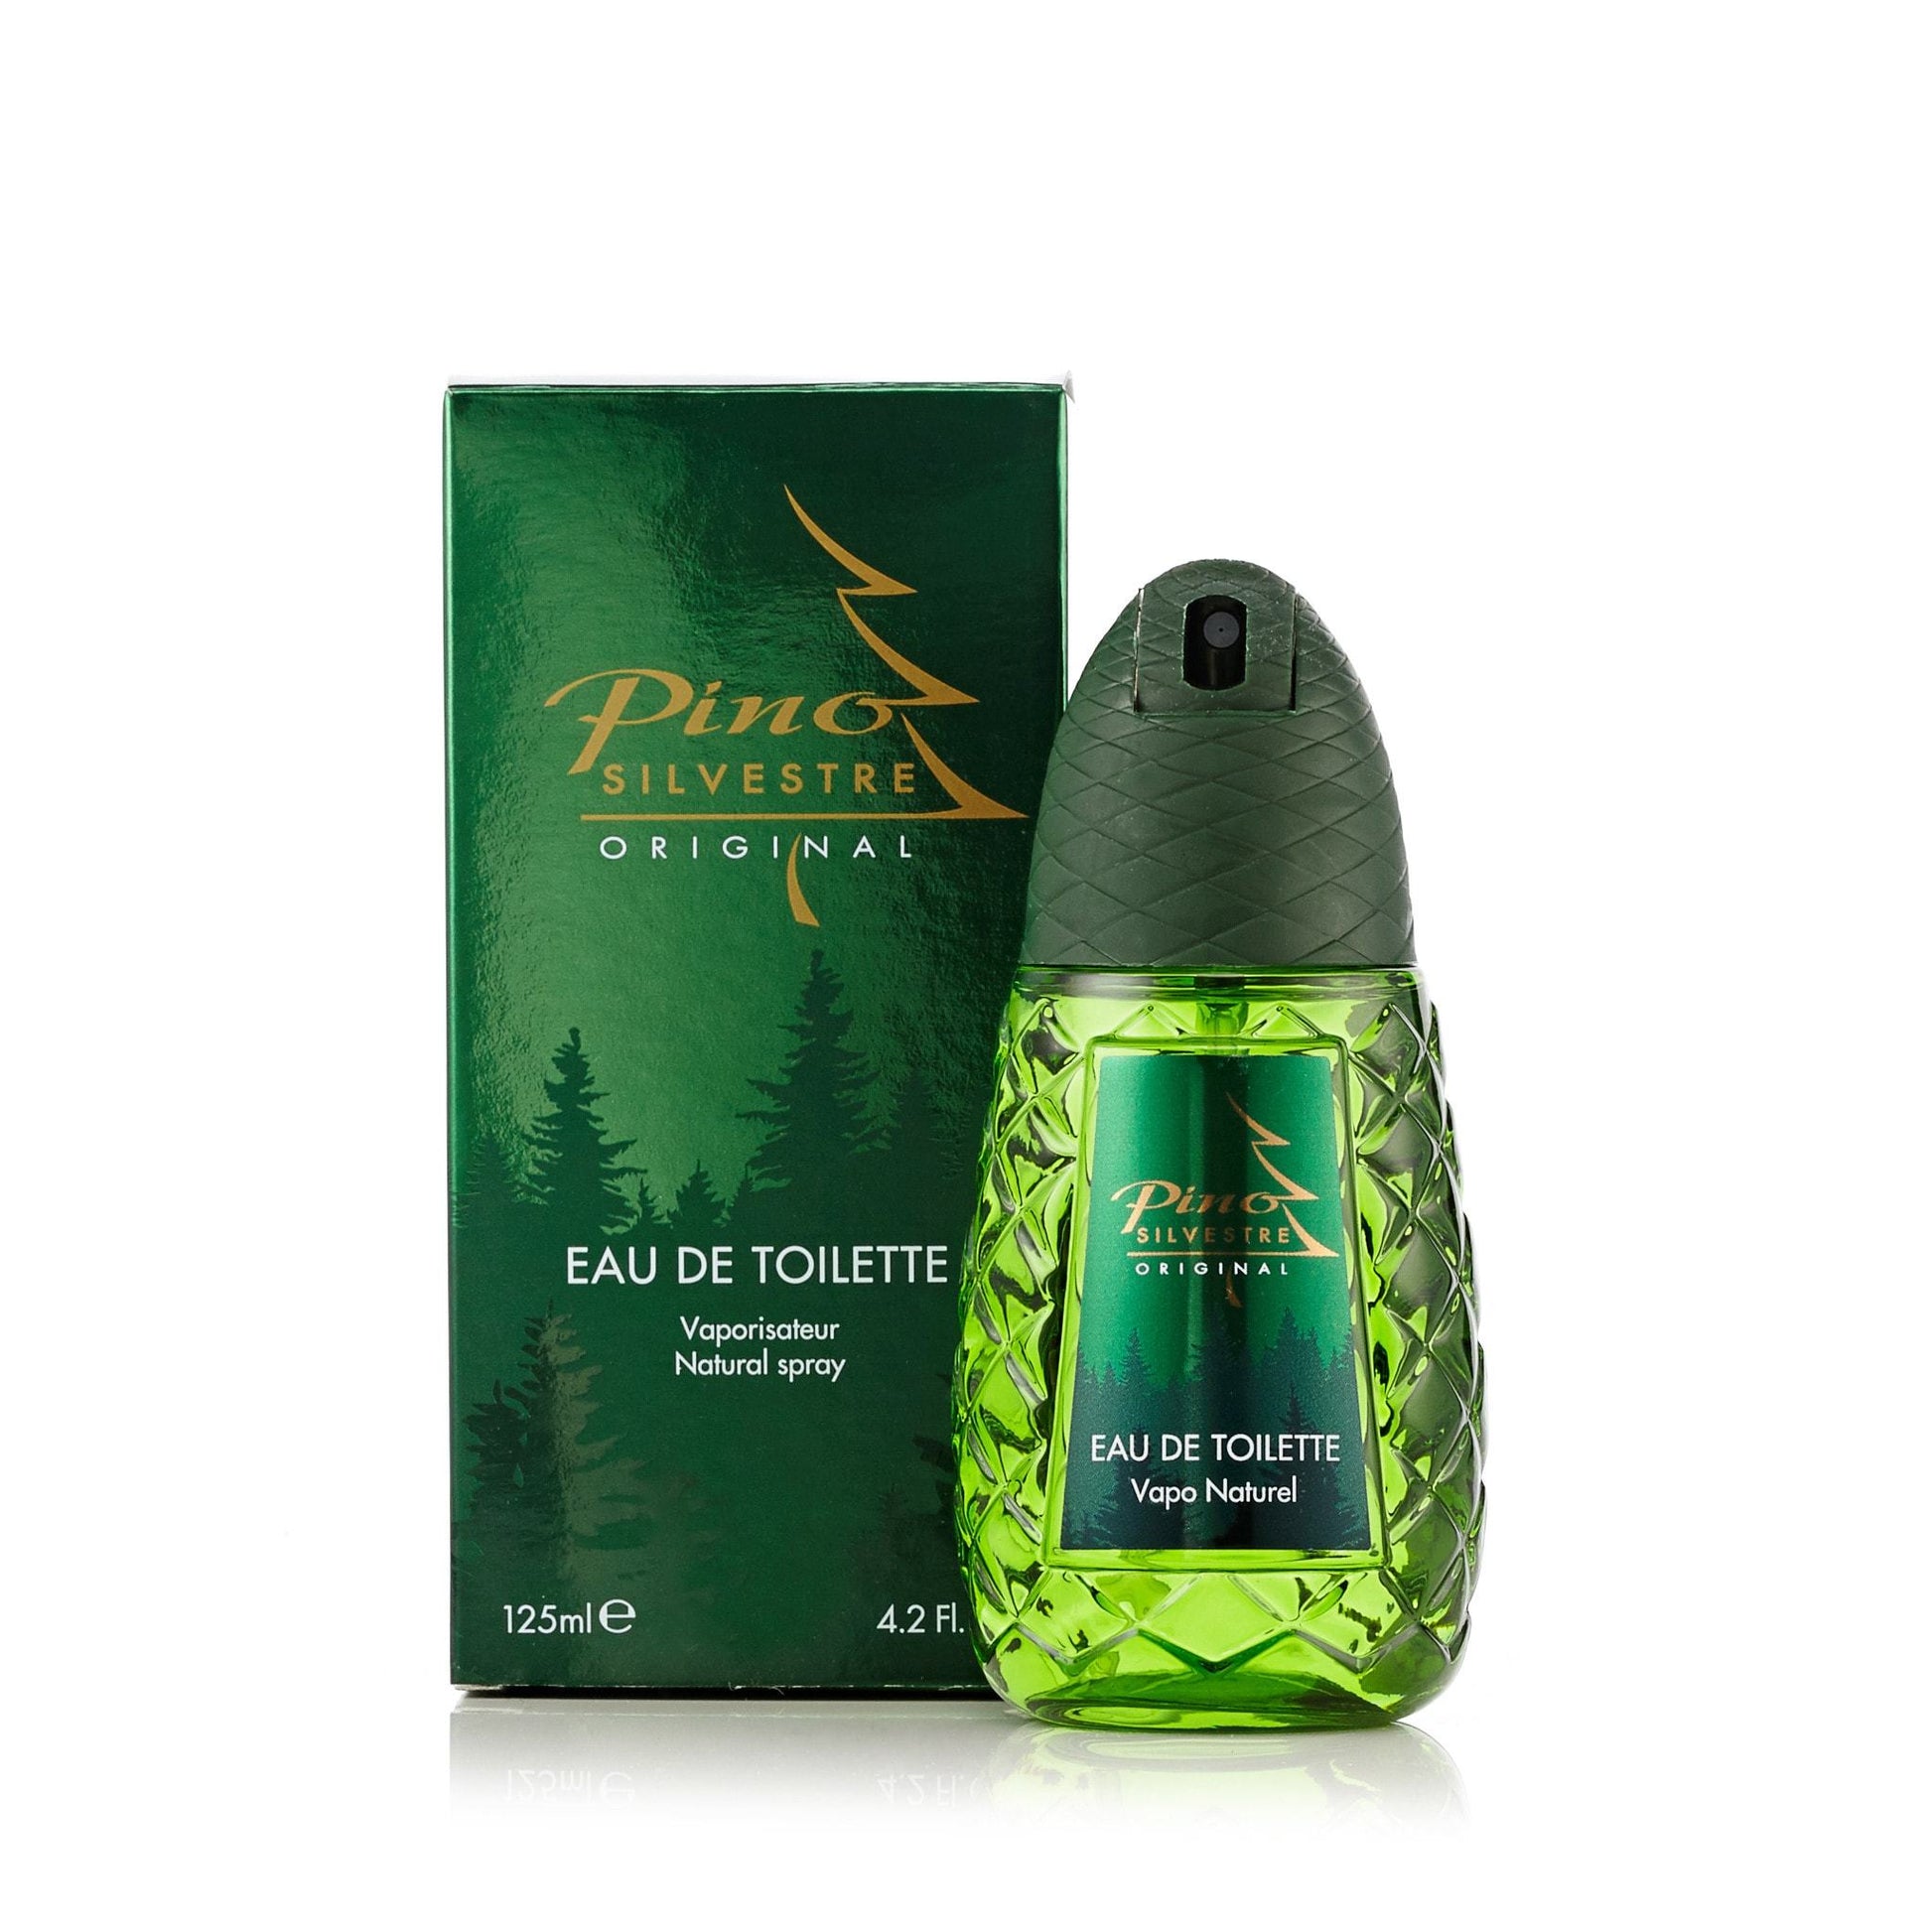 Pino Silvestre Original Eau de Toilette Spray for Men by Pino Silvestre, Product image 3